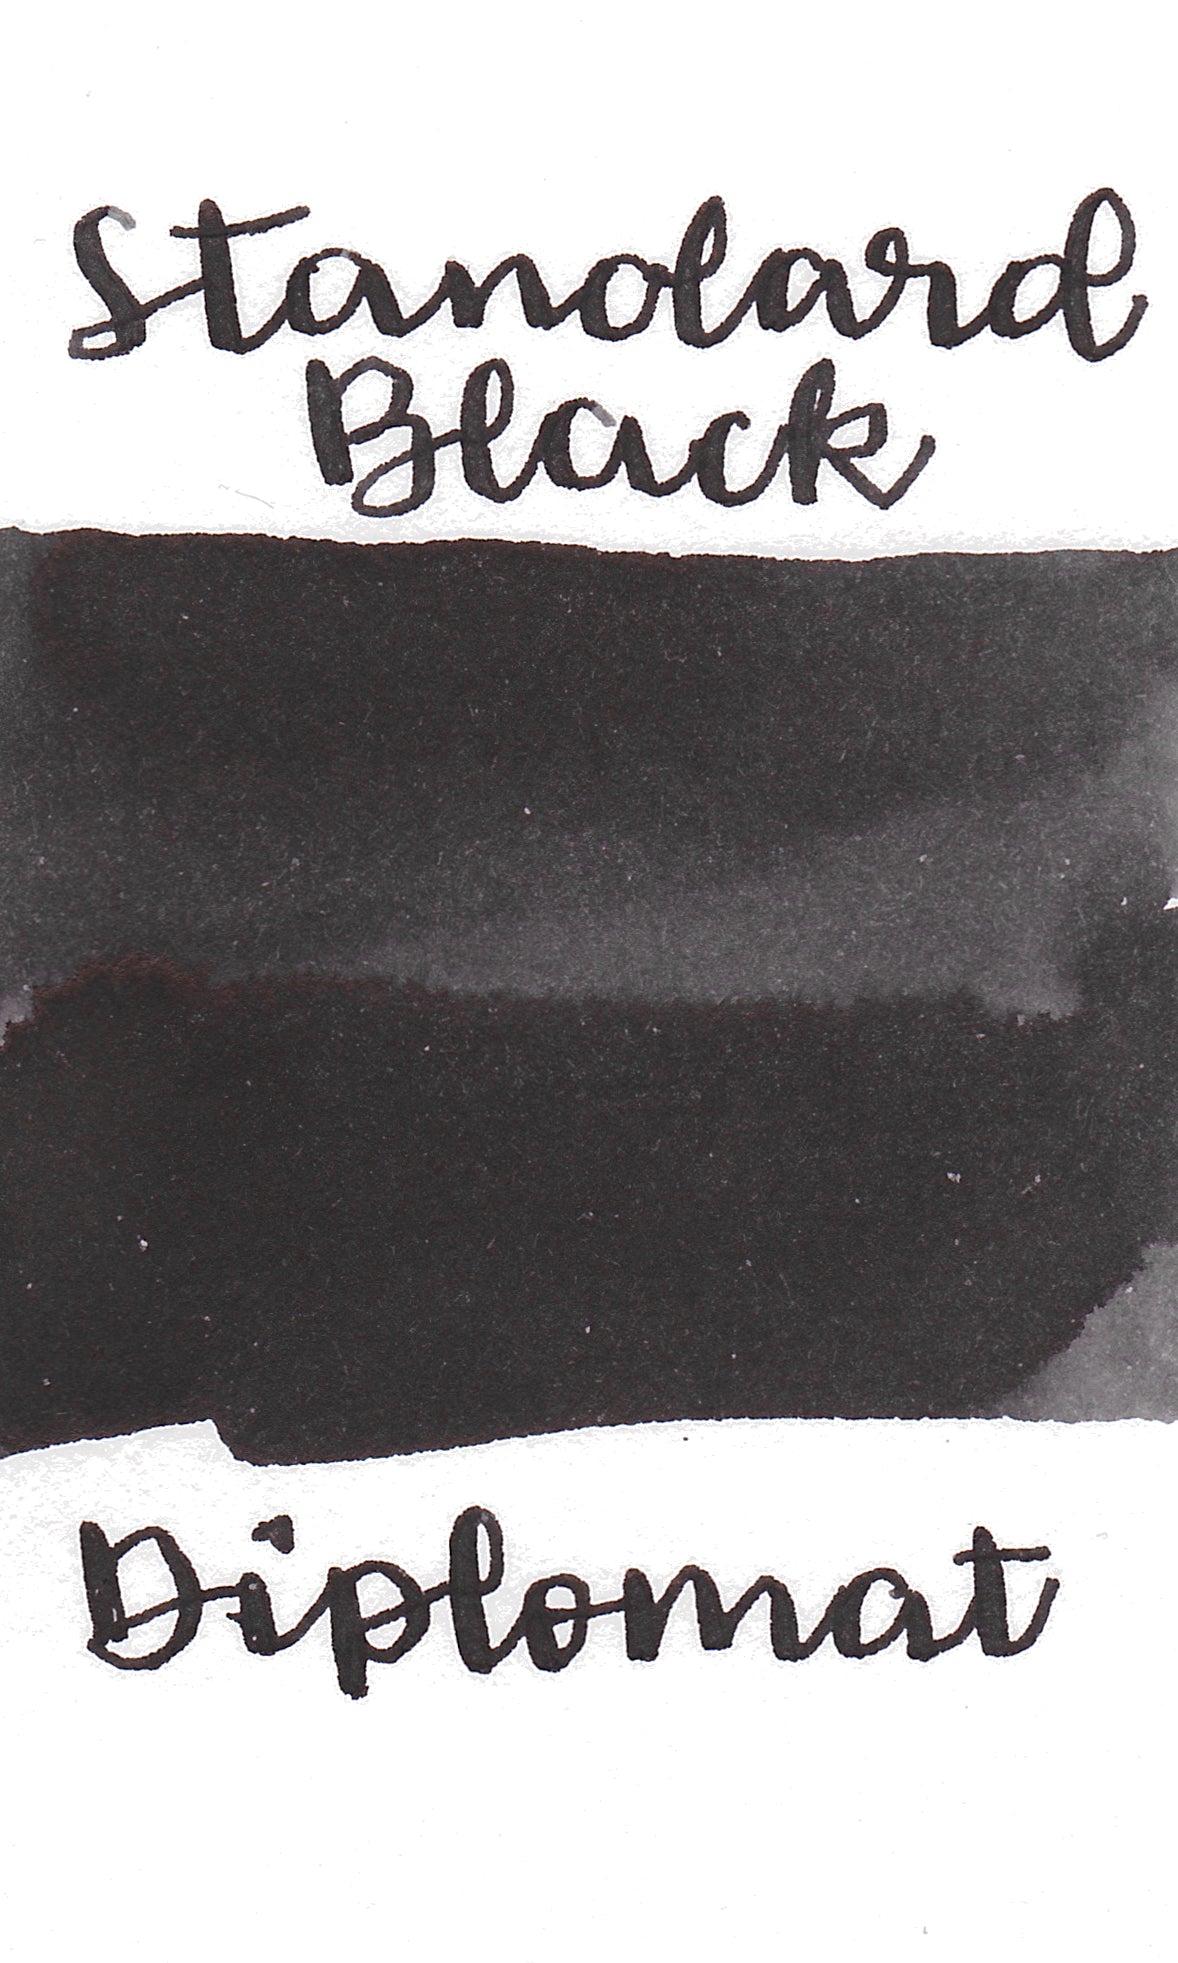 Diplomat Standard Black Ink